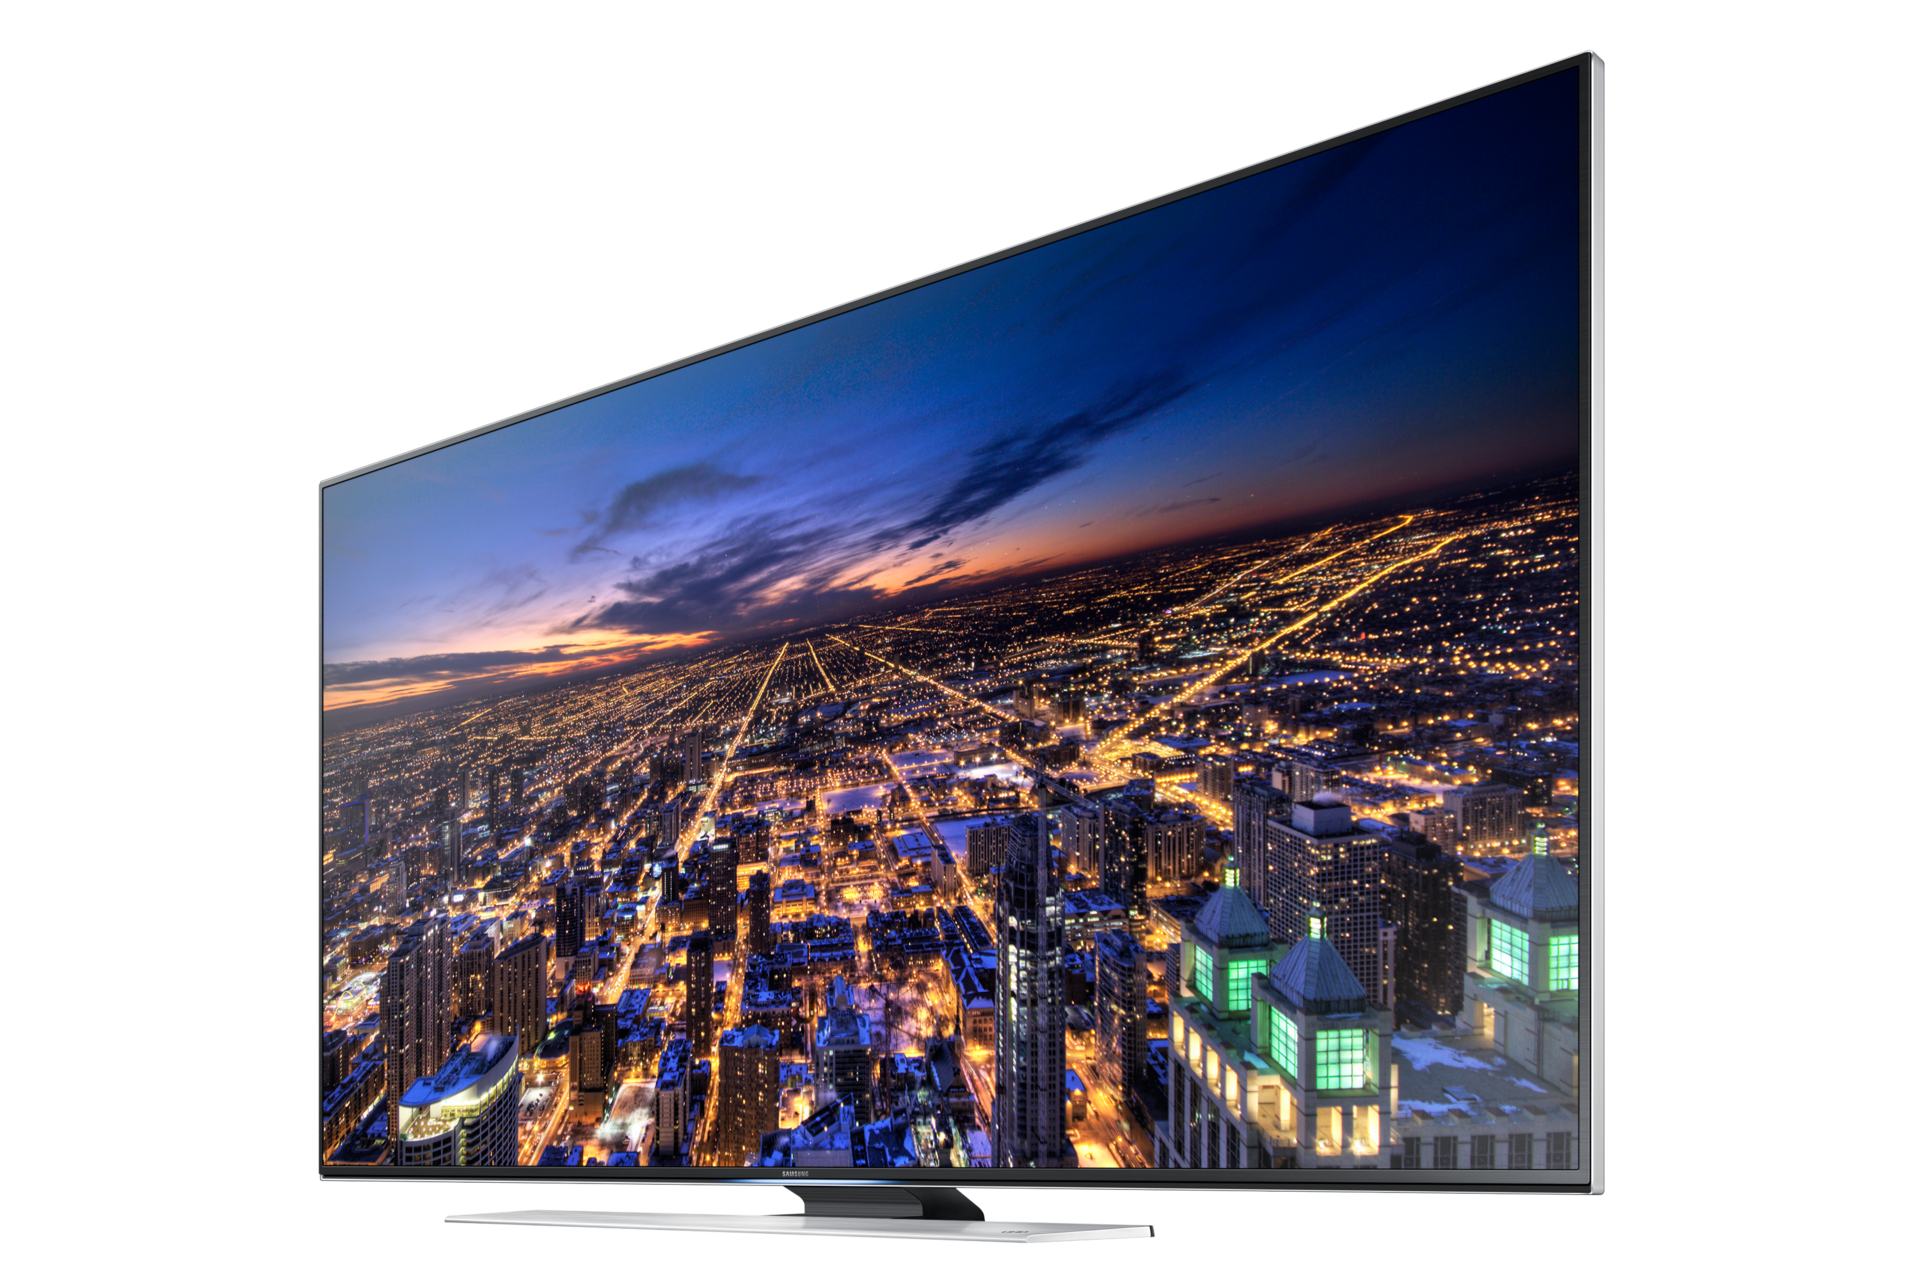 Samsung UHD TV, 4K TV, 85 Inch UHD Full HD TV Price, Features, Specs